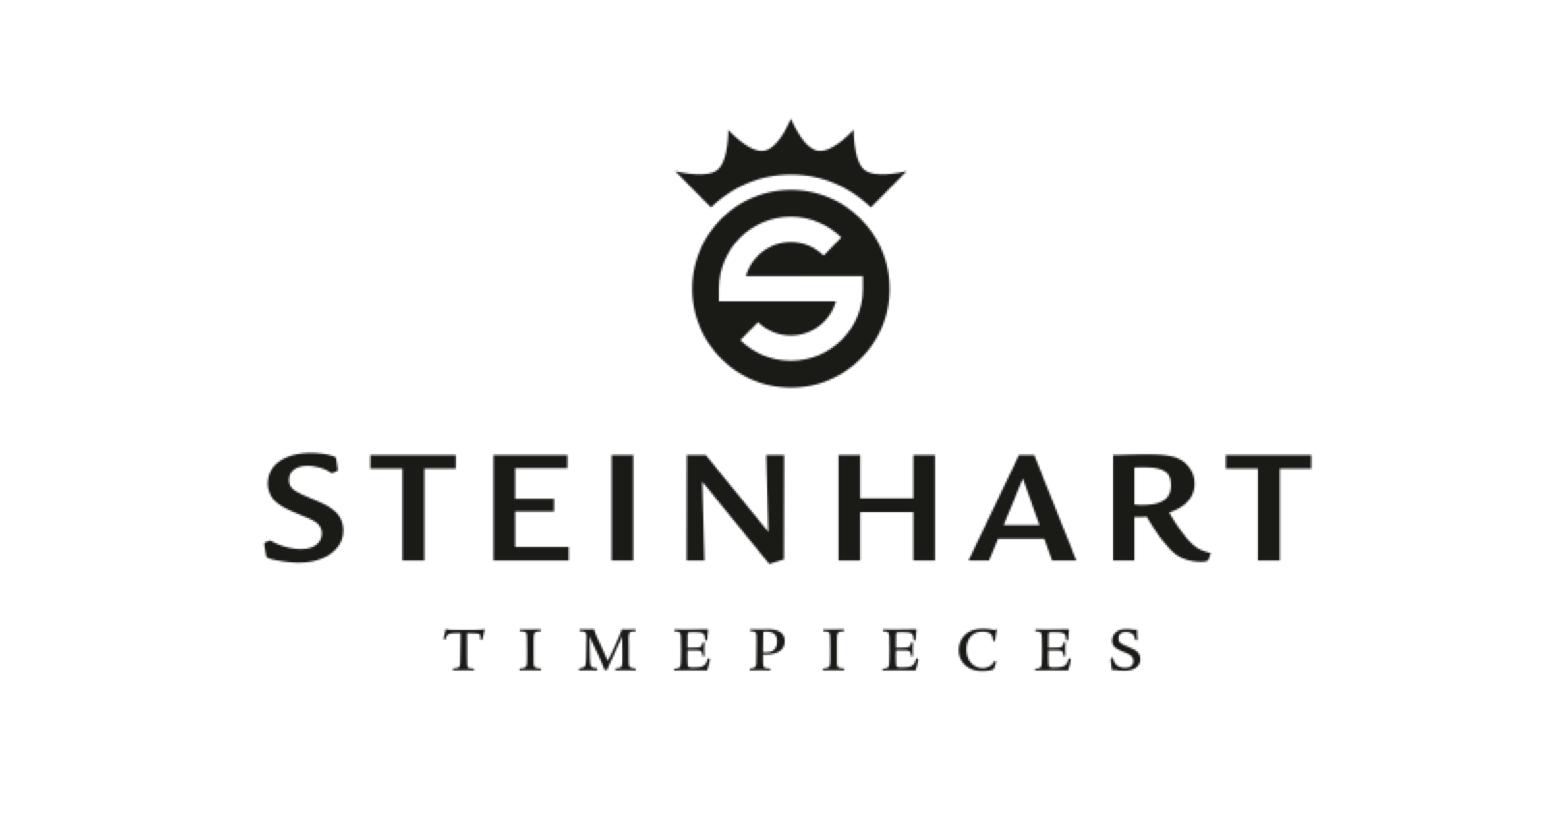 d'horlogerie - Offizieller Deutschland Distributor der Firma Steinhart Watches